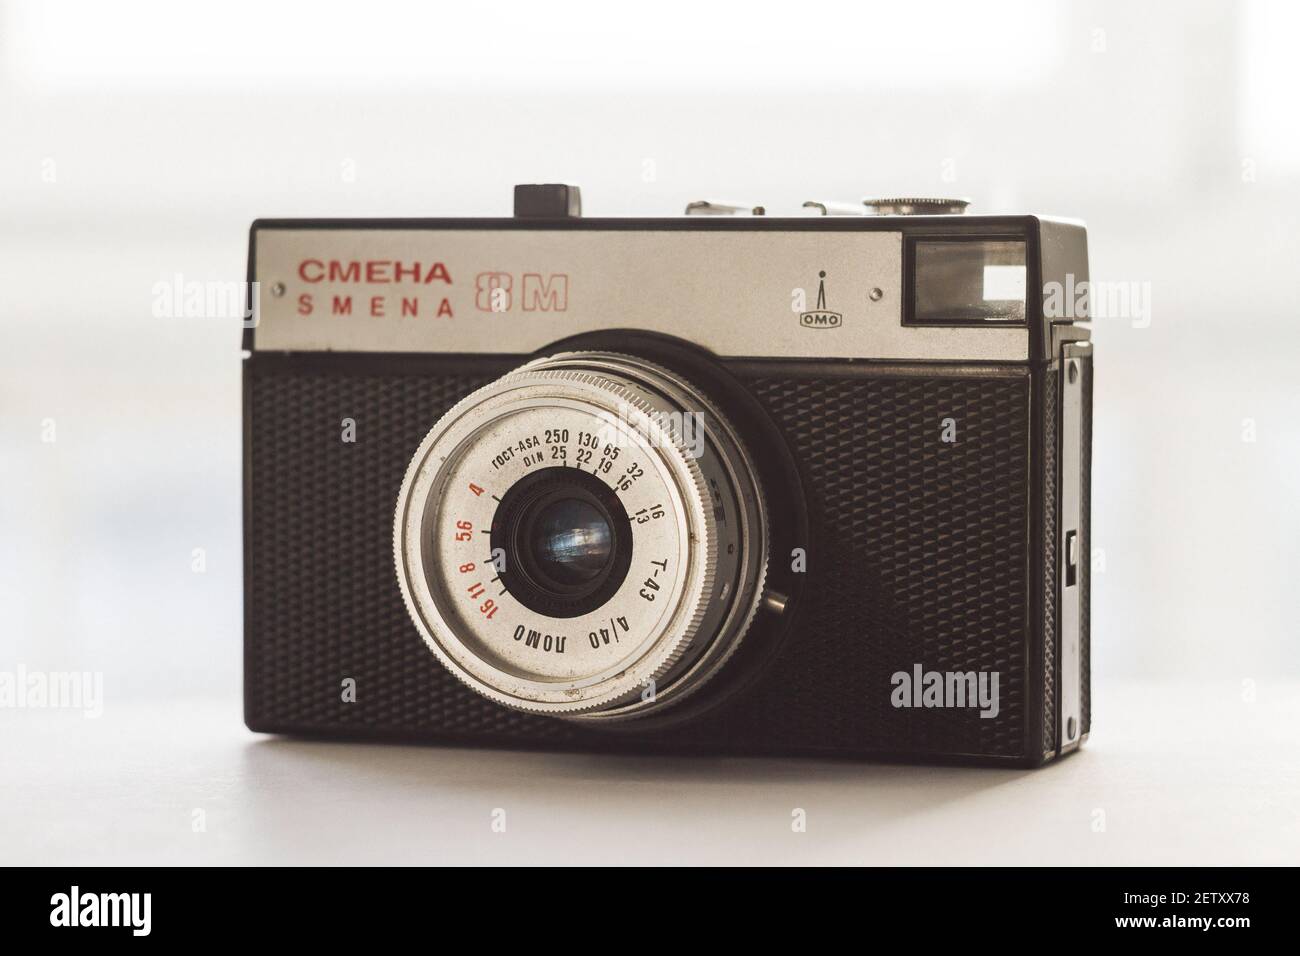 Retro photo camera Smena 8M made in USSR. Old 35 mm film camera manufactured in Soviet Union. Illustrative editorial: Ufa, Russia - January 31, 2014 Stock Photo